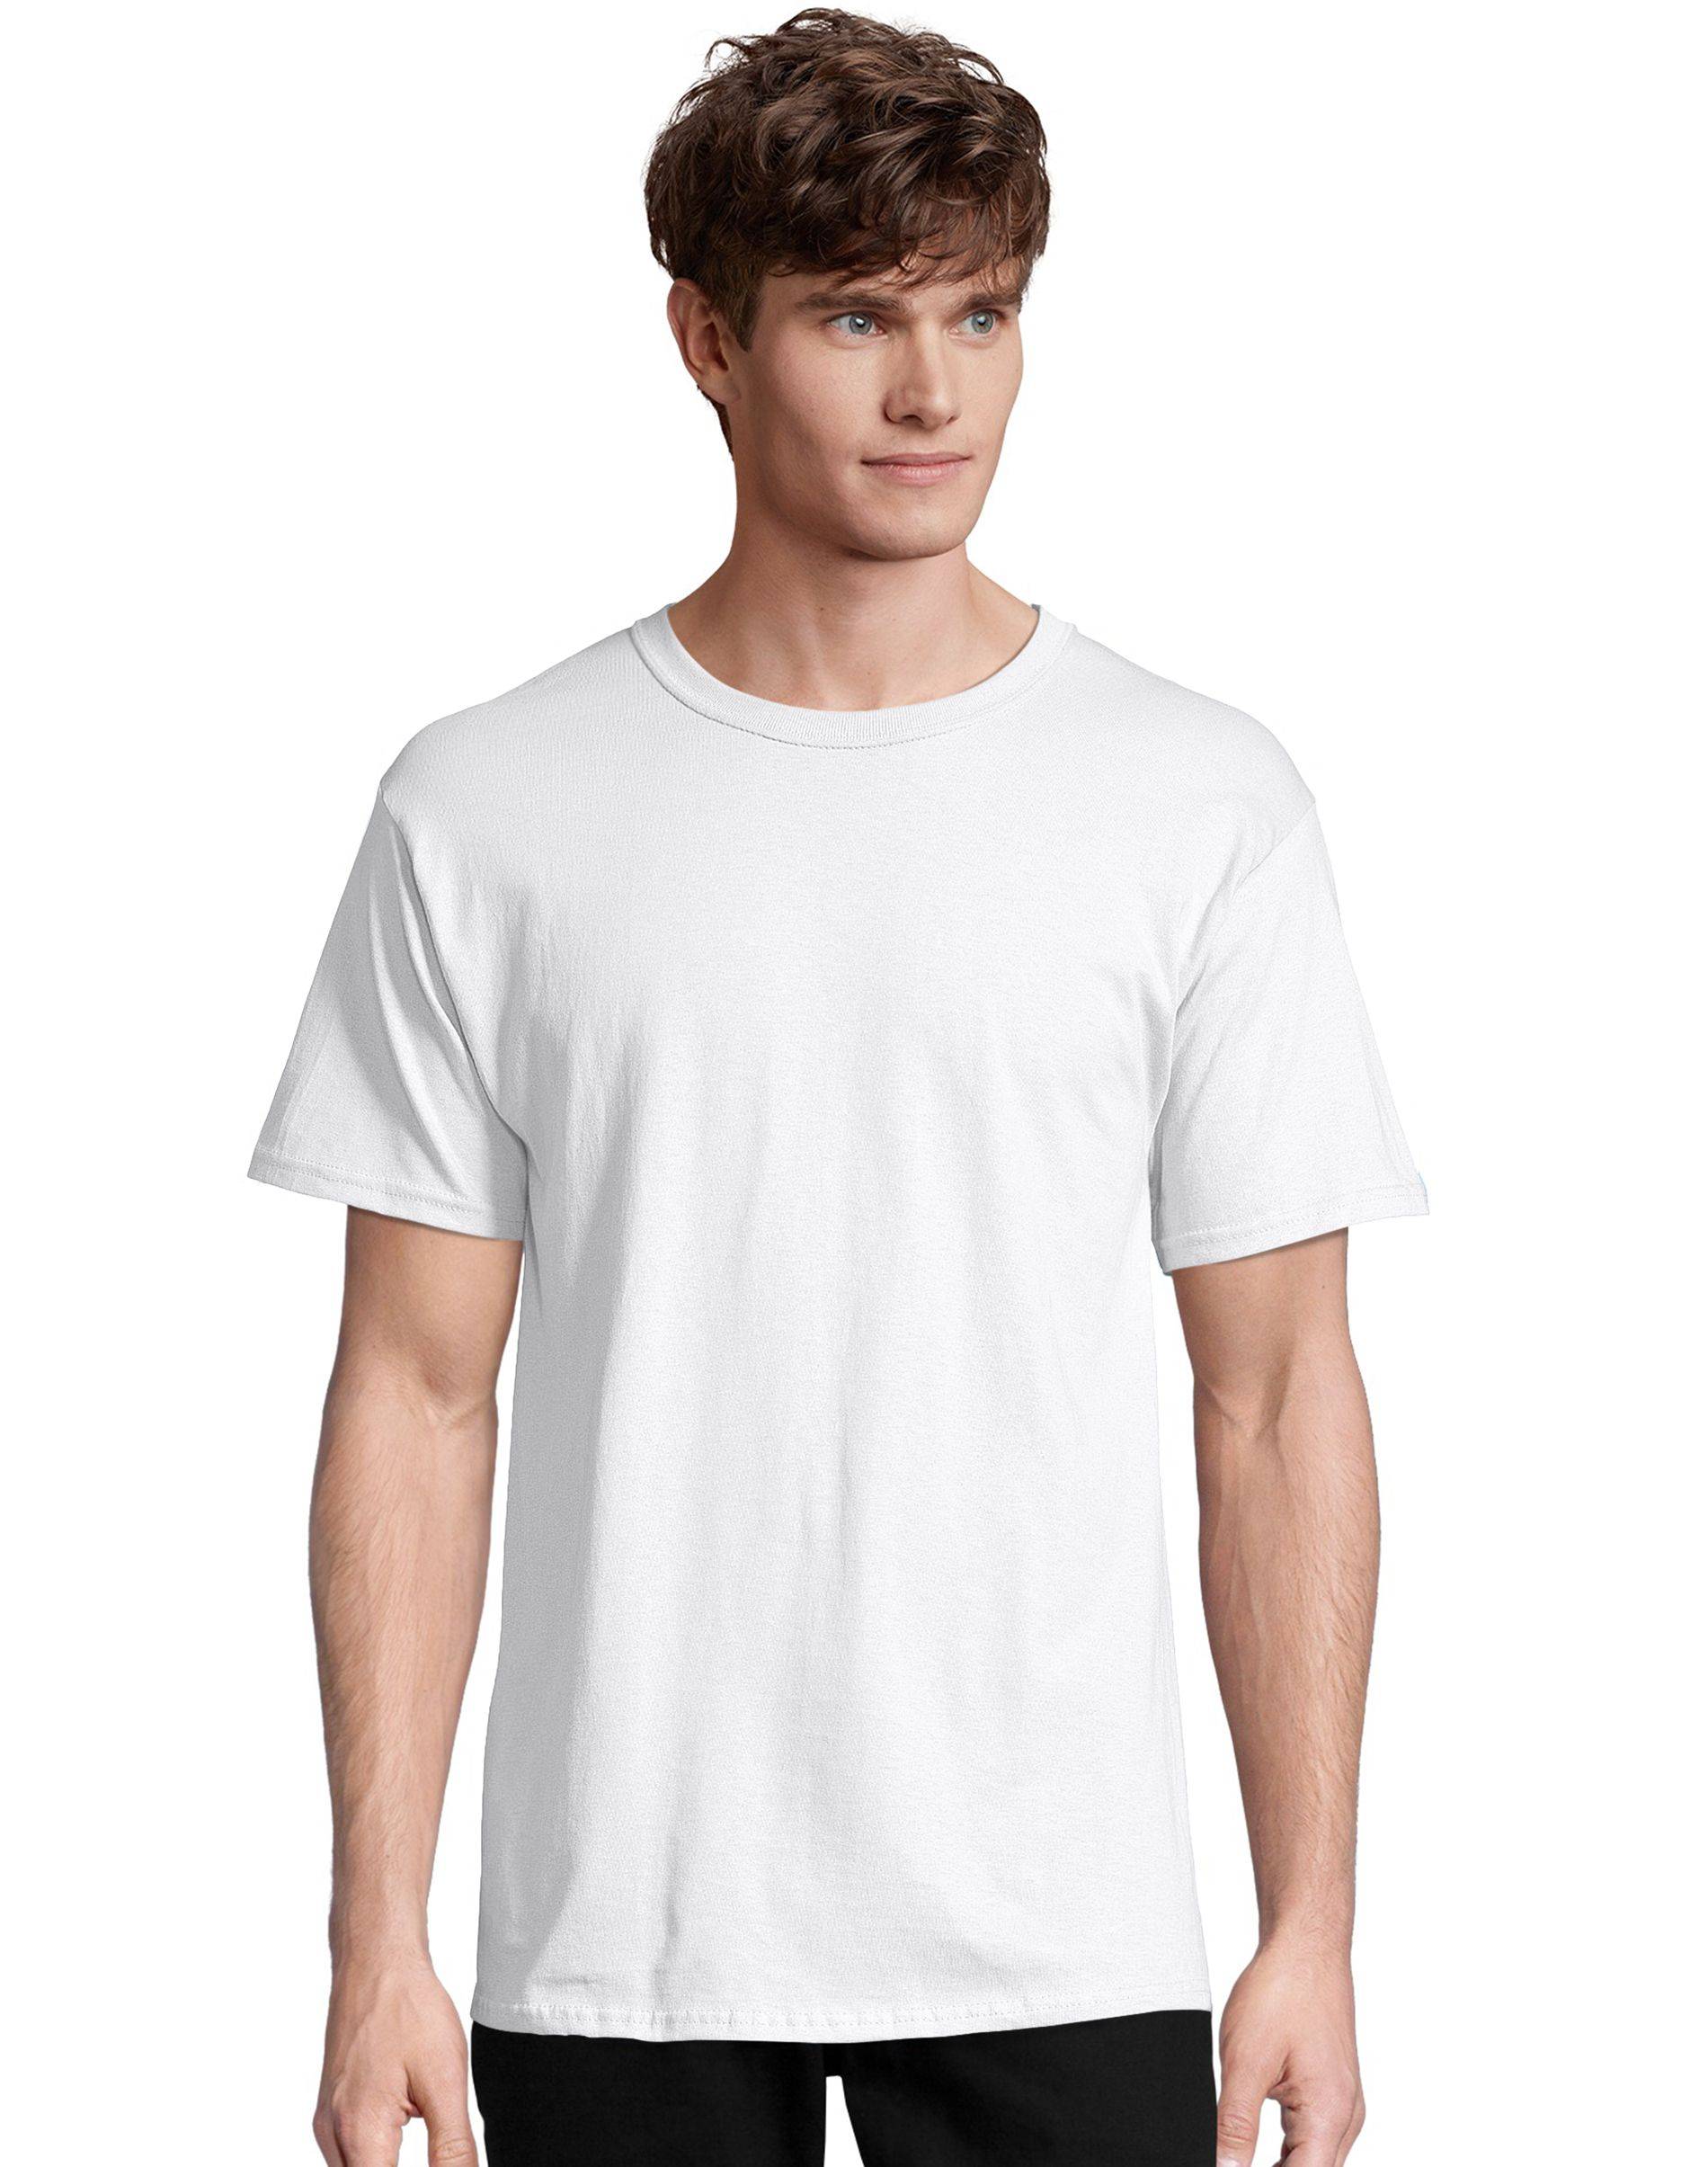 Hanes - ComfortSoft Heavyweight 100% Cotton T-Shirt. 5280